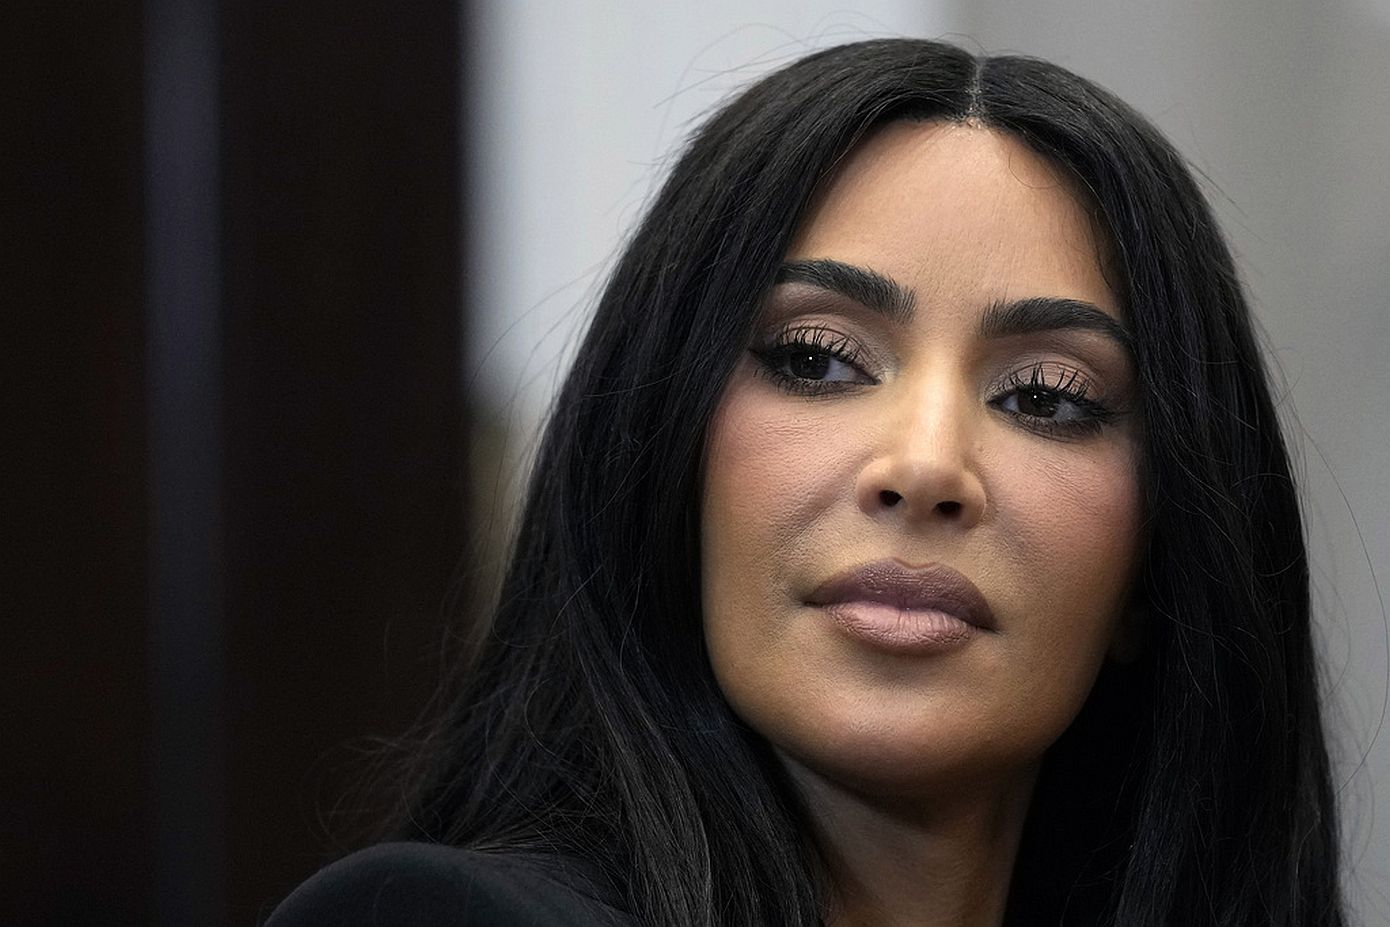 H Kim Kardashian έπαθε χημικό κάψιμο στα μαλλιά της που την οδήγησε σε χημικό&#8230; κόψιμο